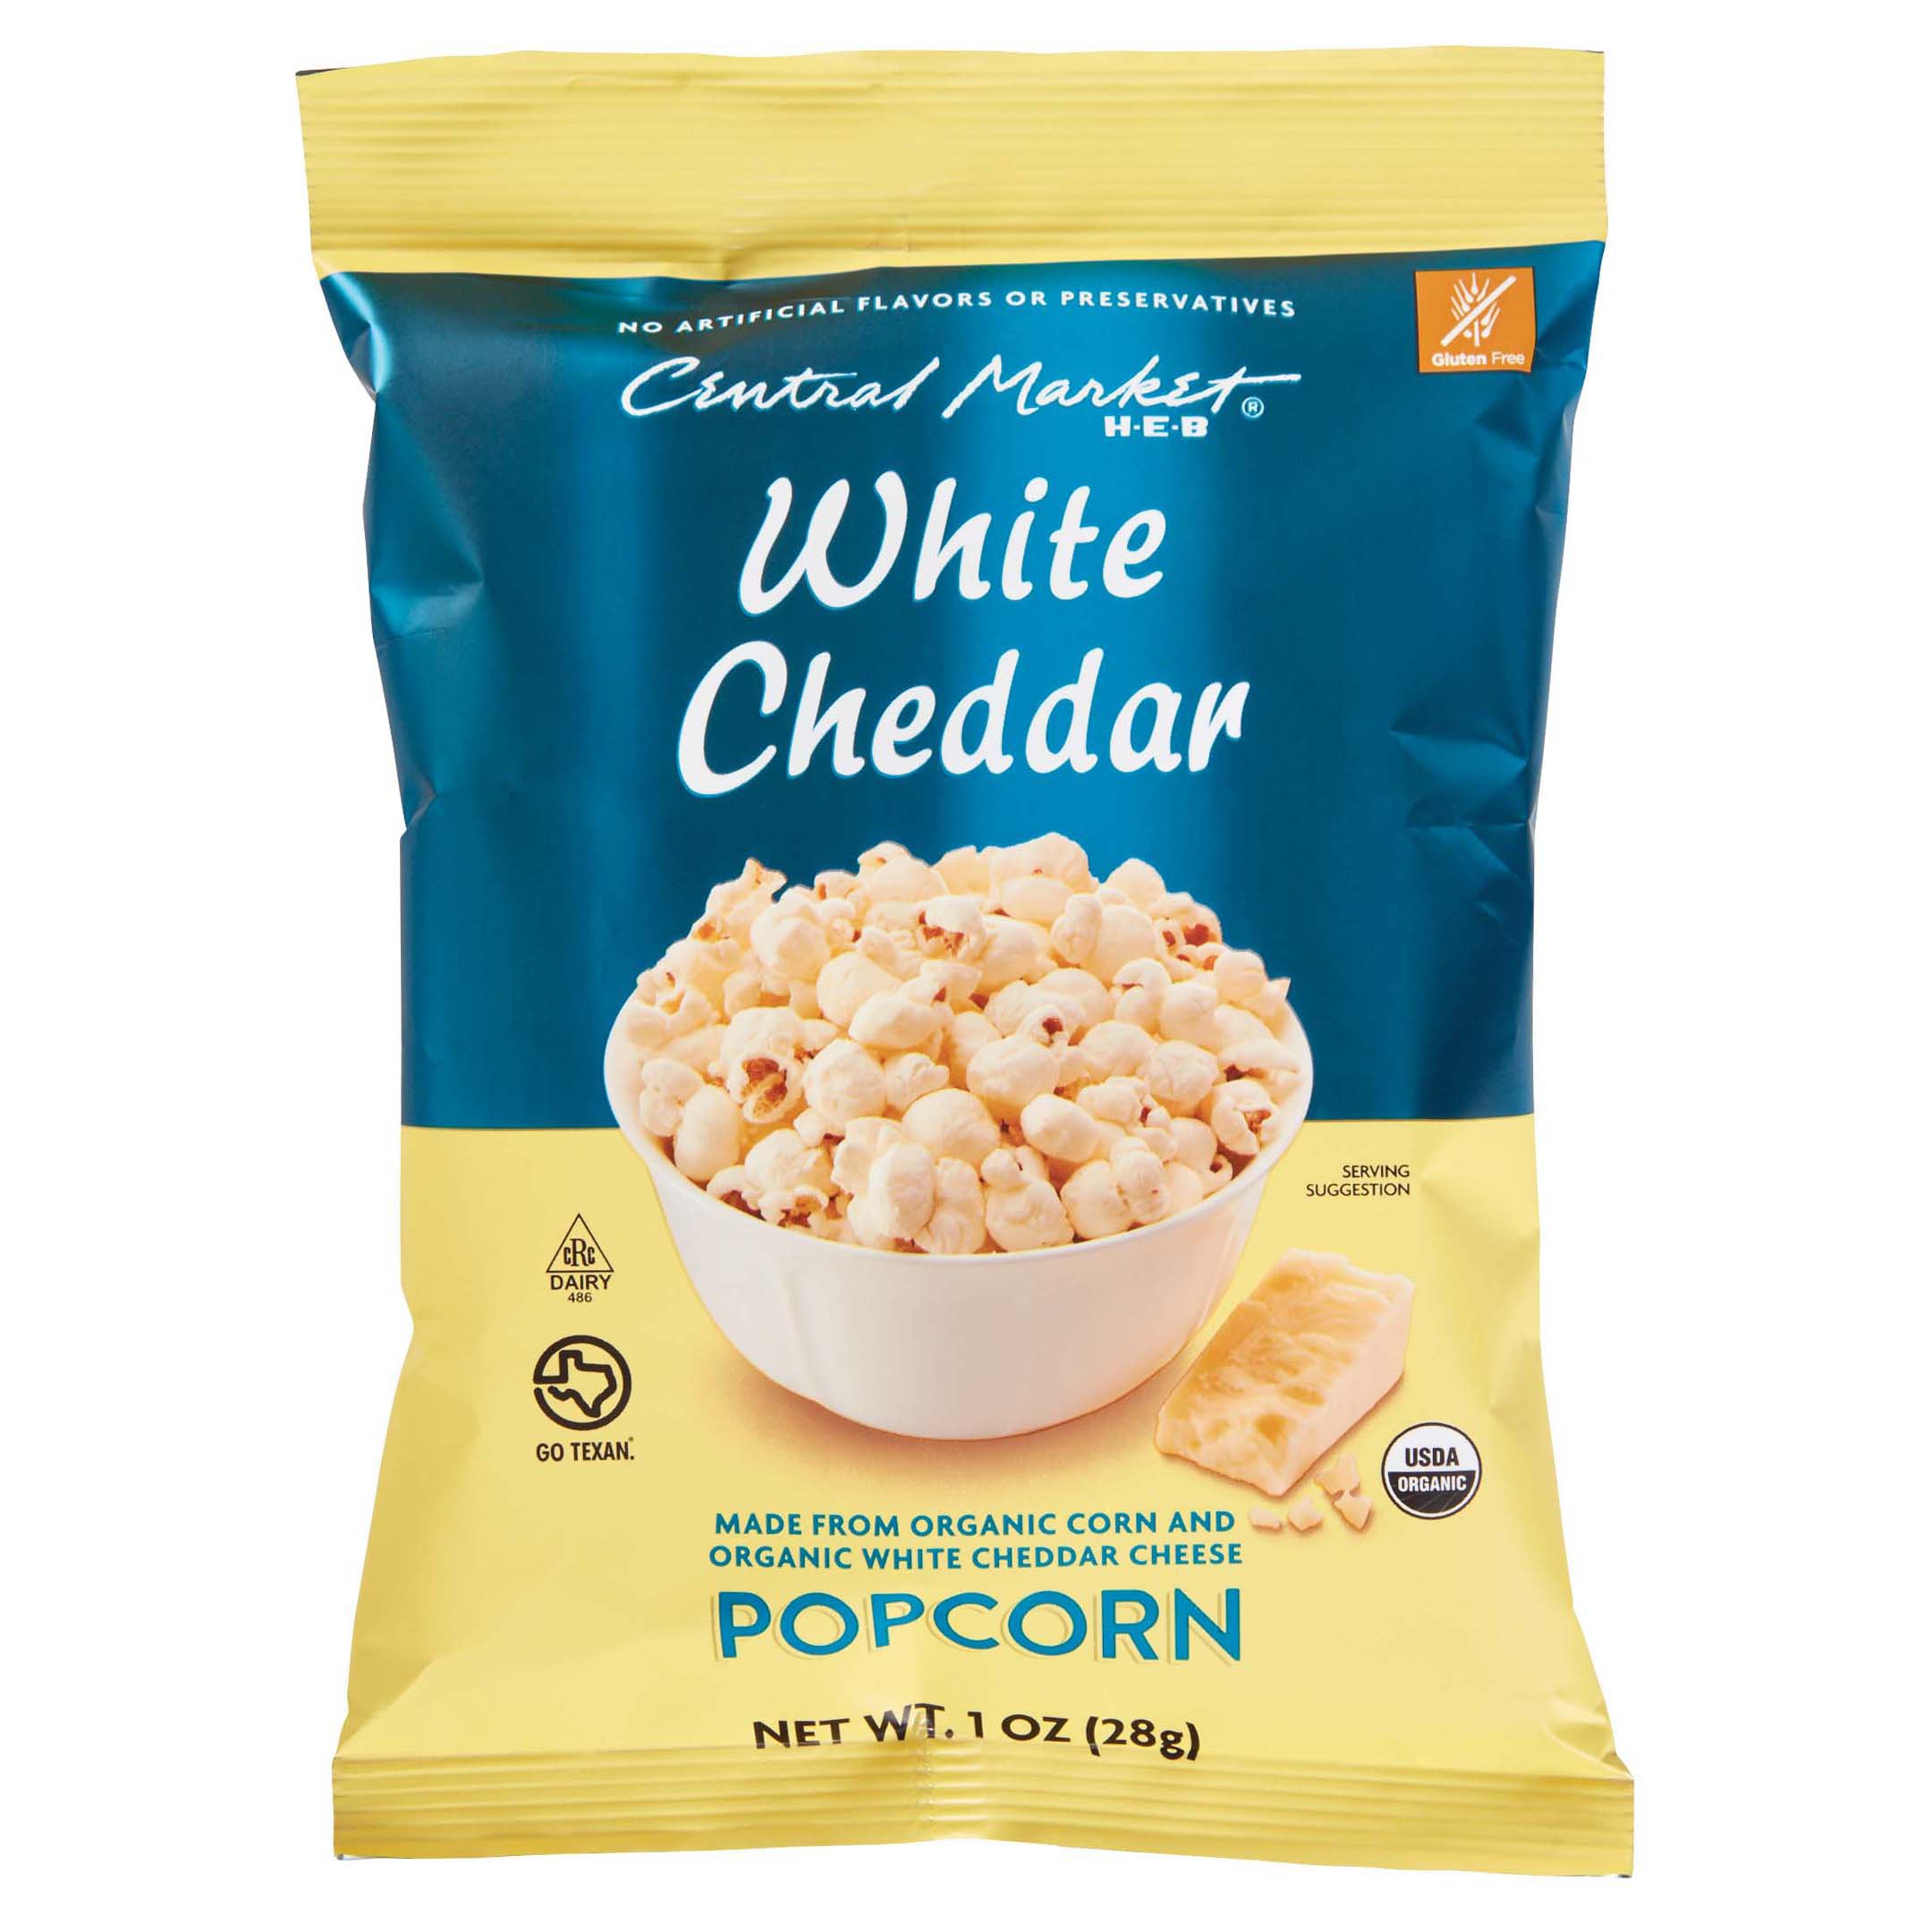 SkinnyPop Sweet & Salty Kettle Popcorn - Shop Popcorn at H-E-B